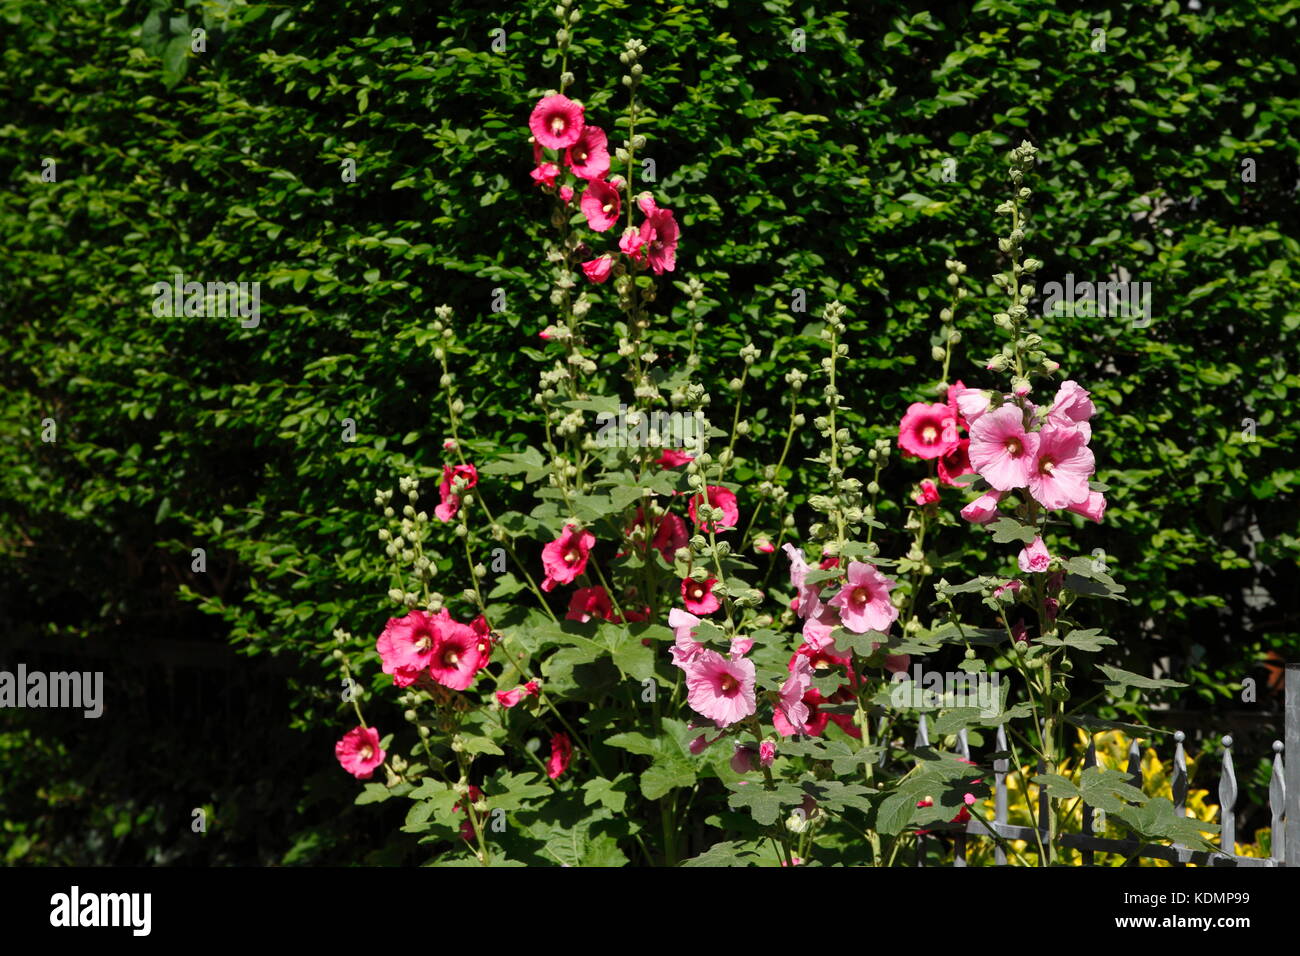 Comune stockrose hollyhock, stock menta, (alcea rosea, althaea rosea, althaea chinensis), Amburgo, Germania, Europa Foto Stock